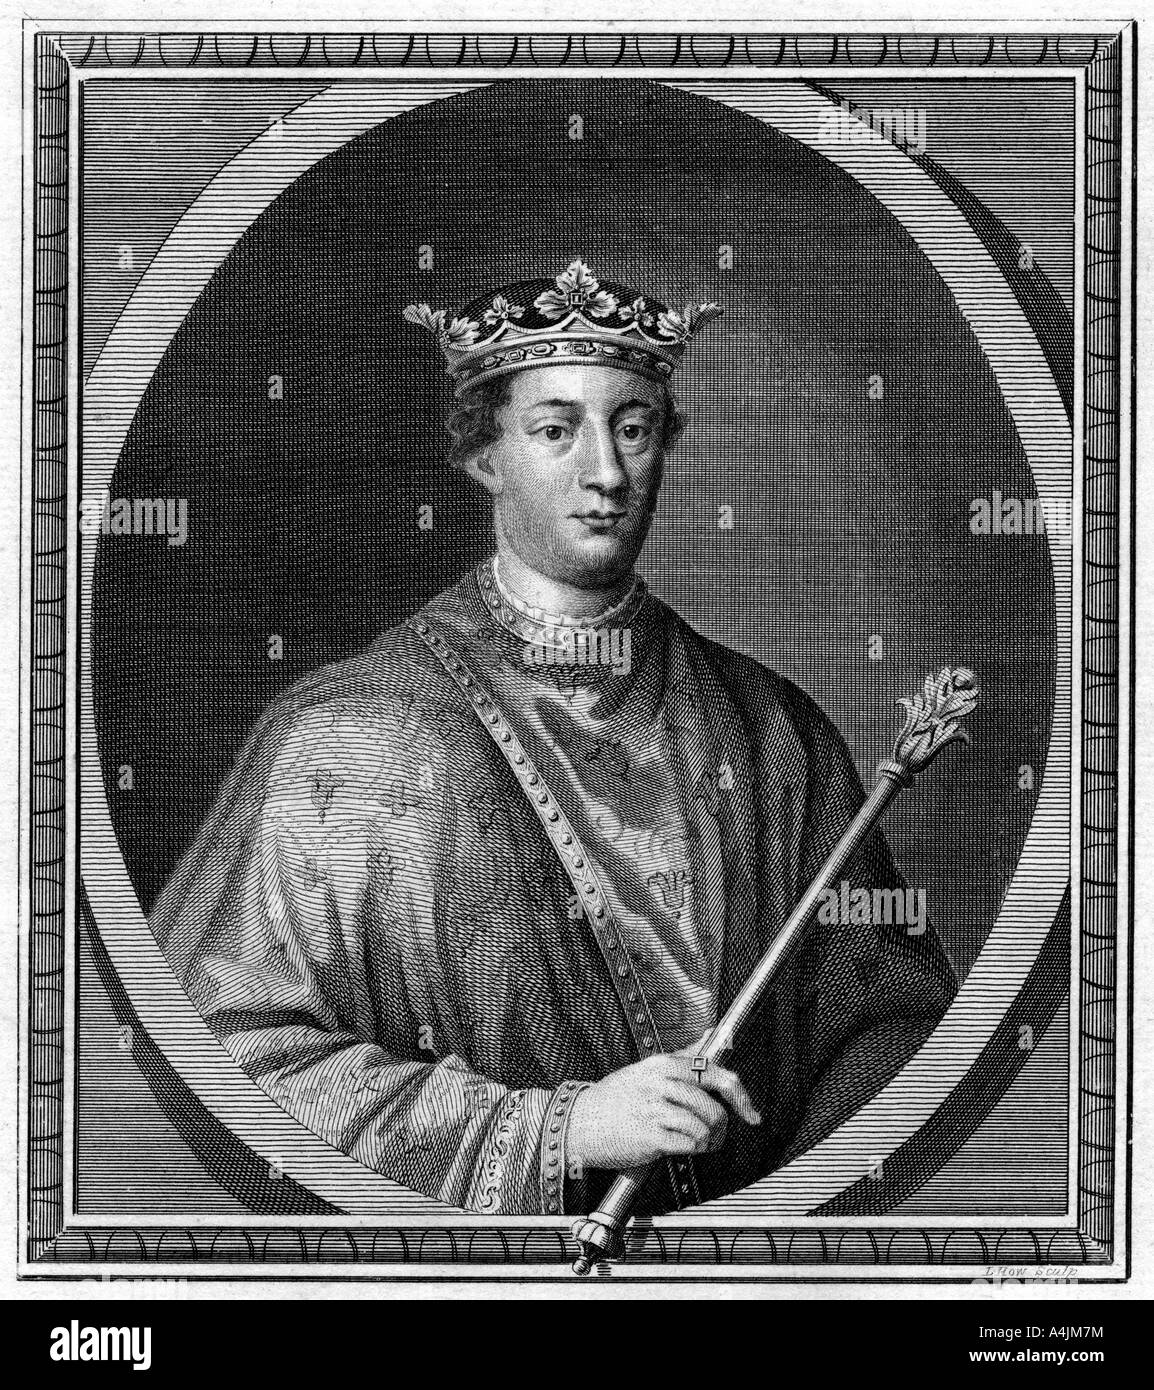 Enrico II, re d'Inghilterra, 1789.Artista: L come Foto Stock